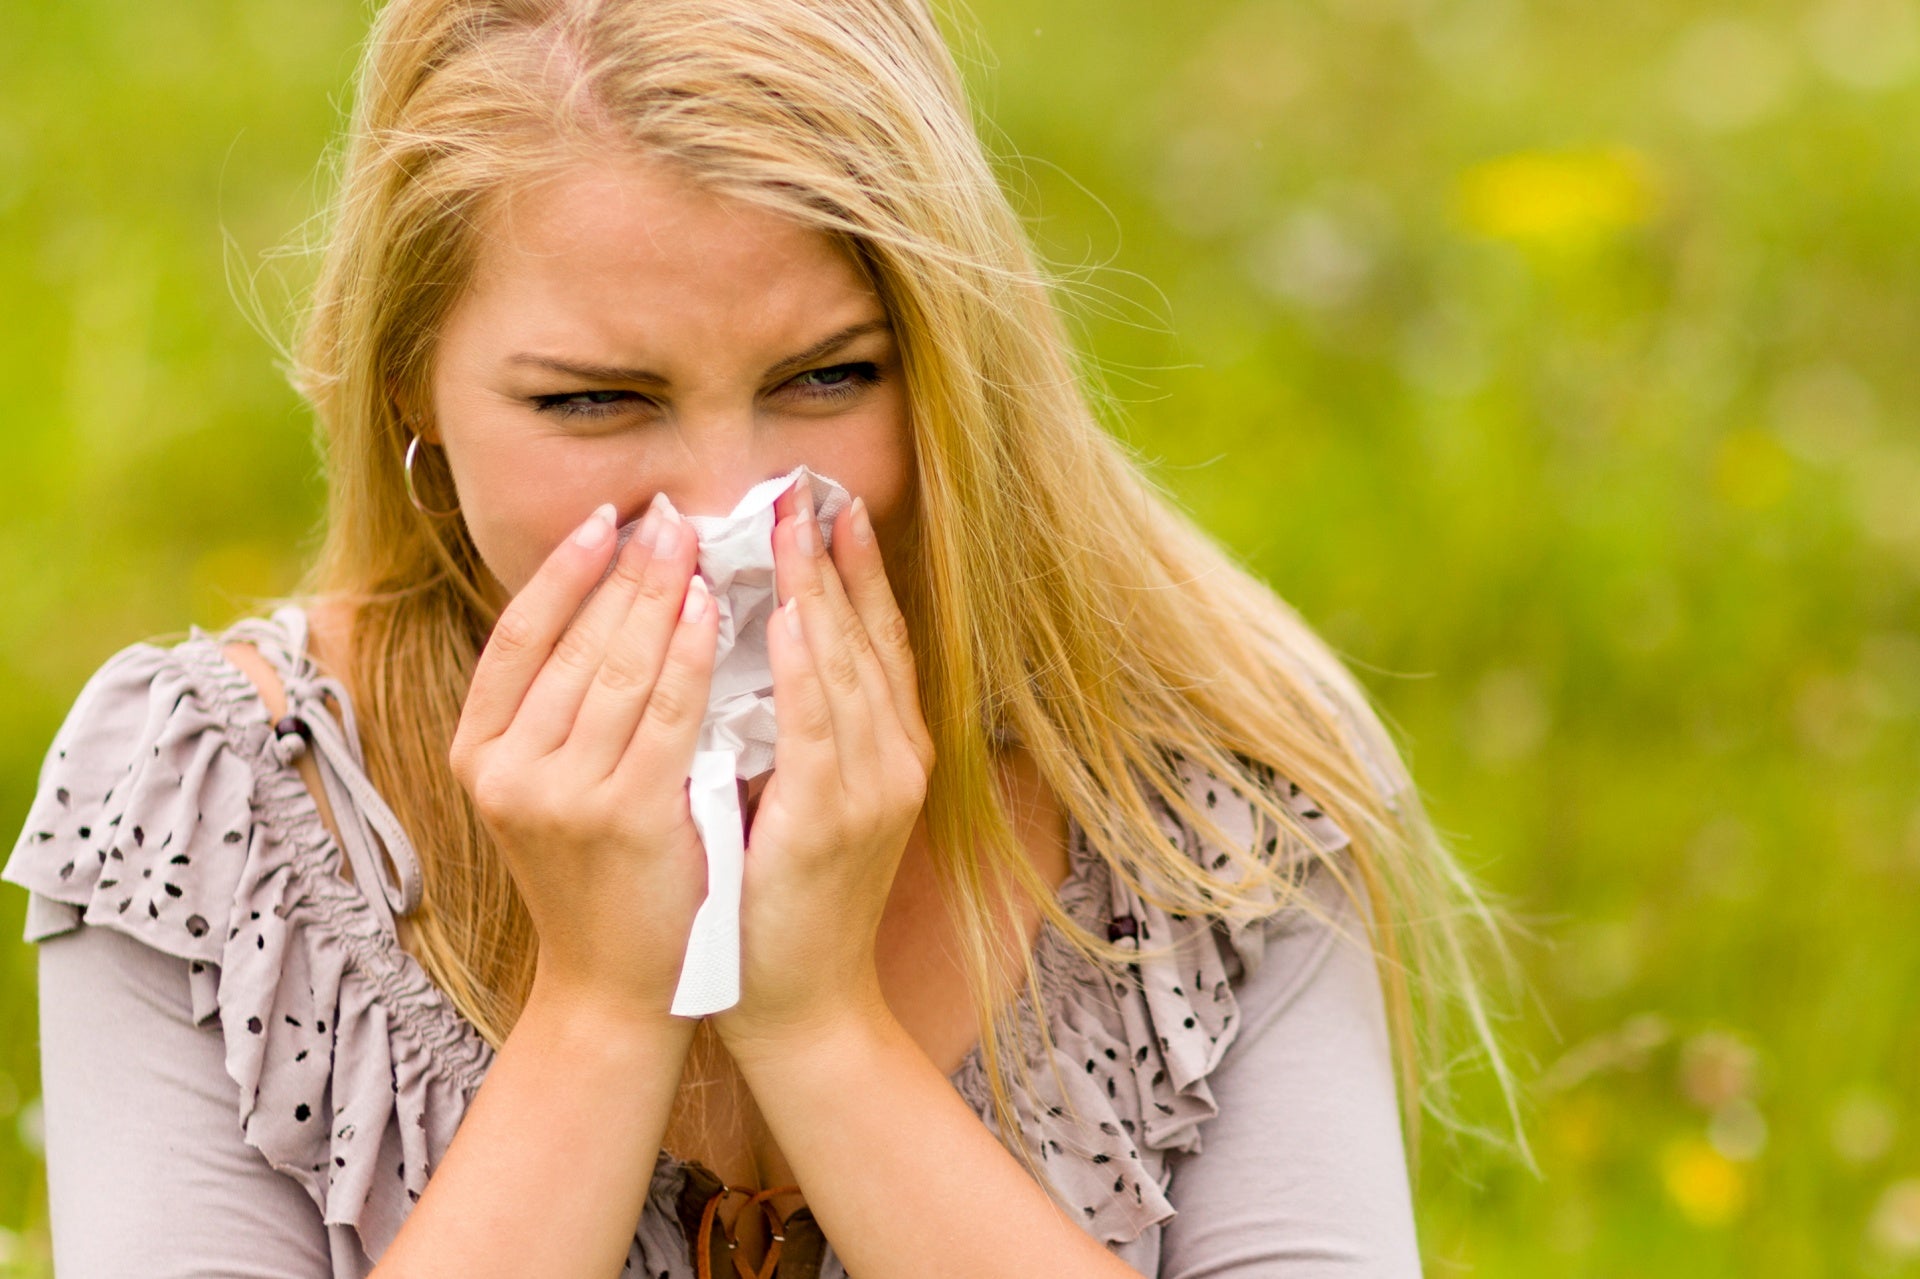 Natural Remedies For Seasonal Allergies